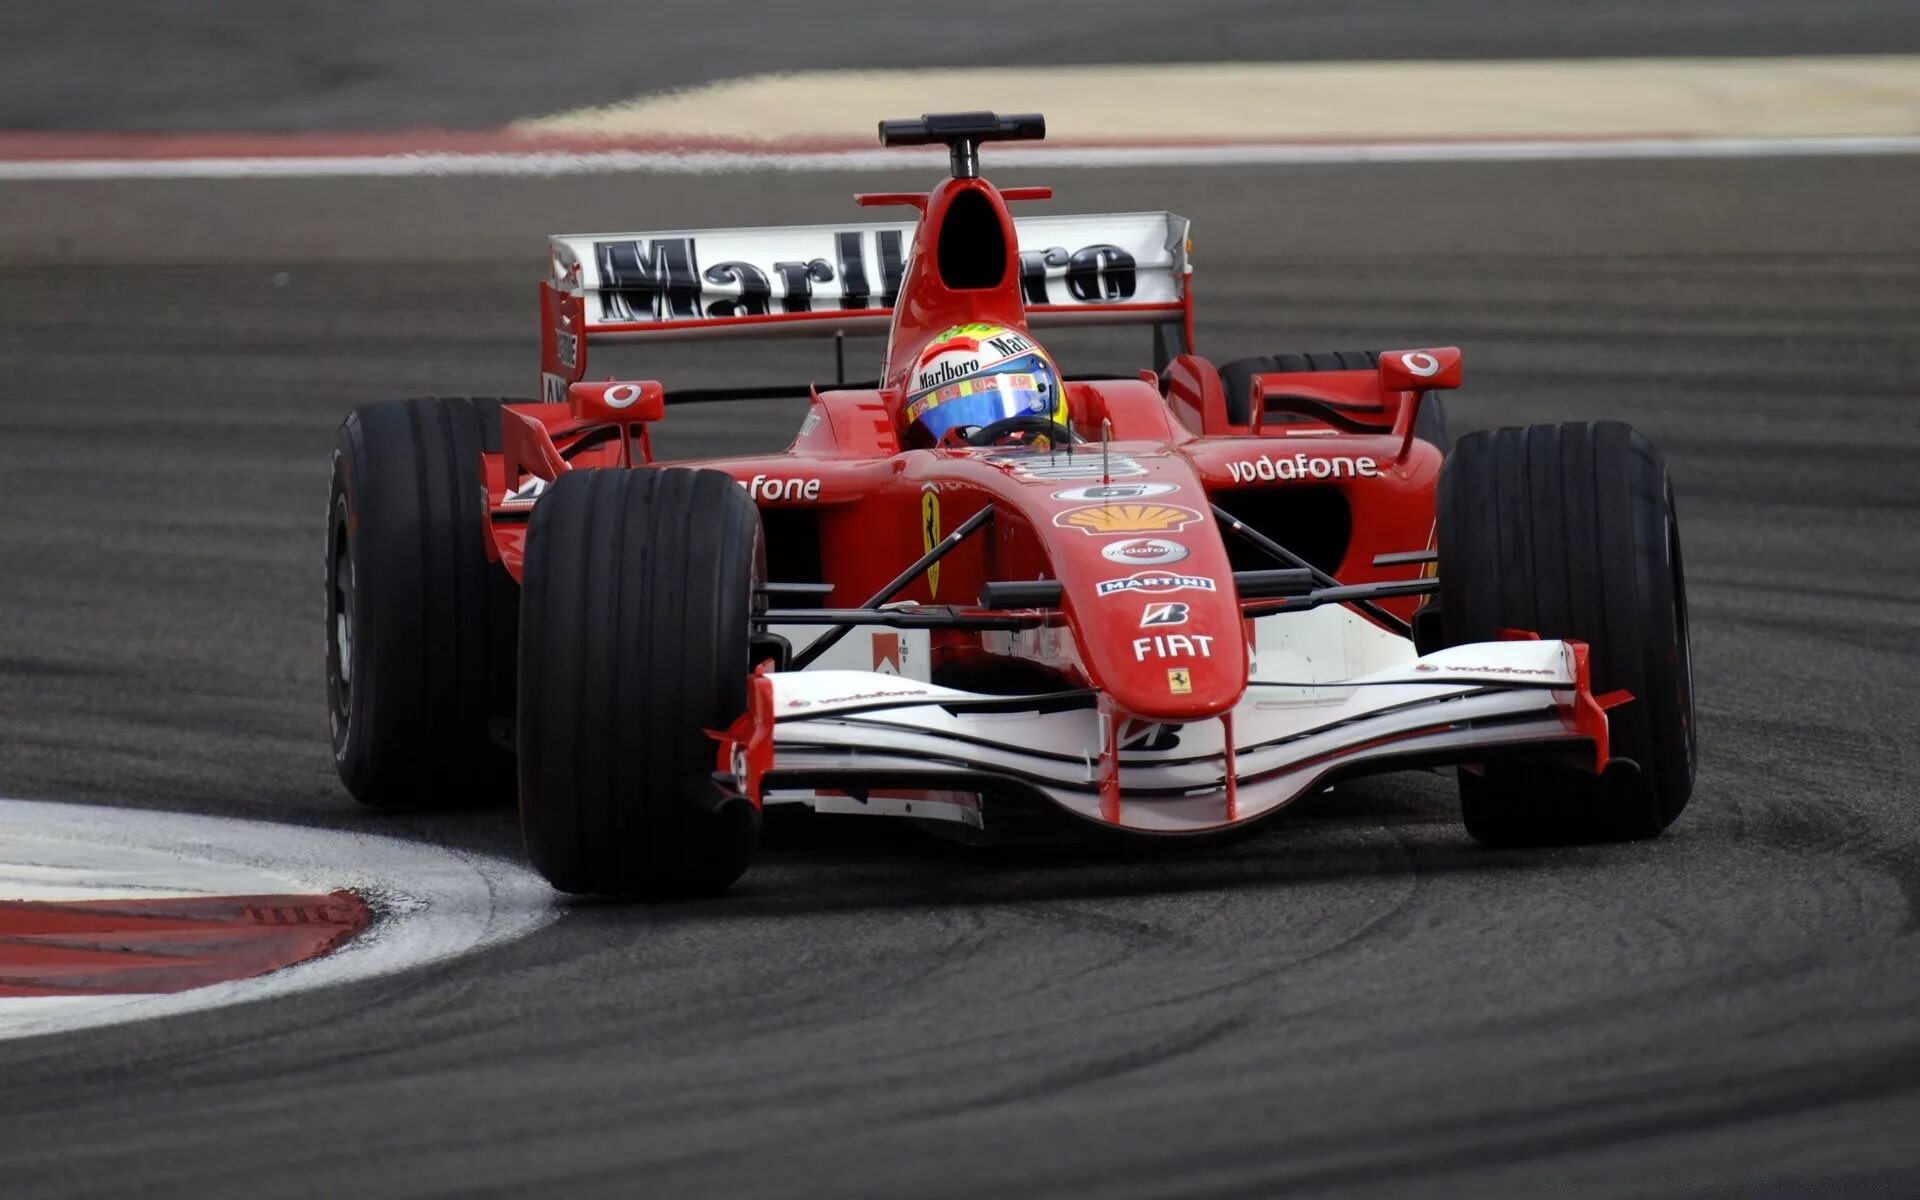 Ferrari Formula 1. Ferrari f1 f310. Феррари гоночная машина формула 1. Гоночный Болид Феррари формула 1. Как называют формулу 1